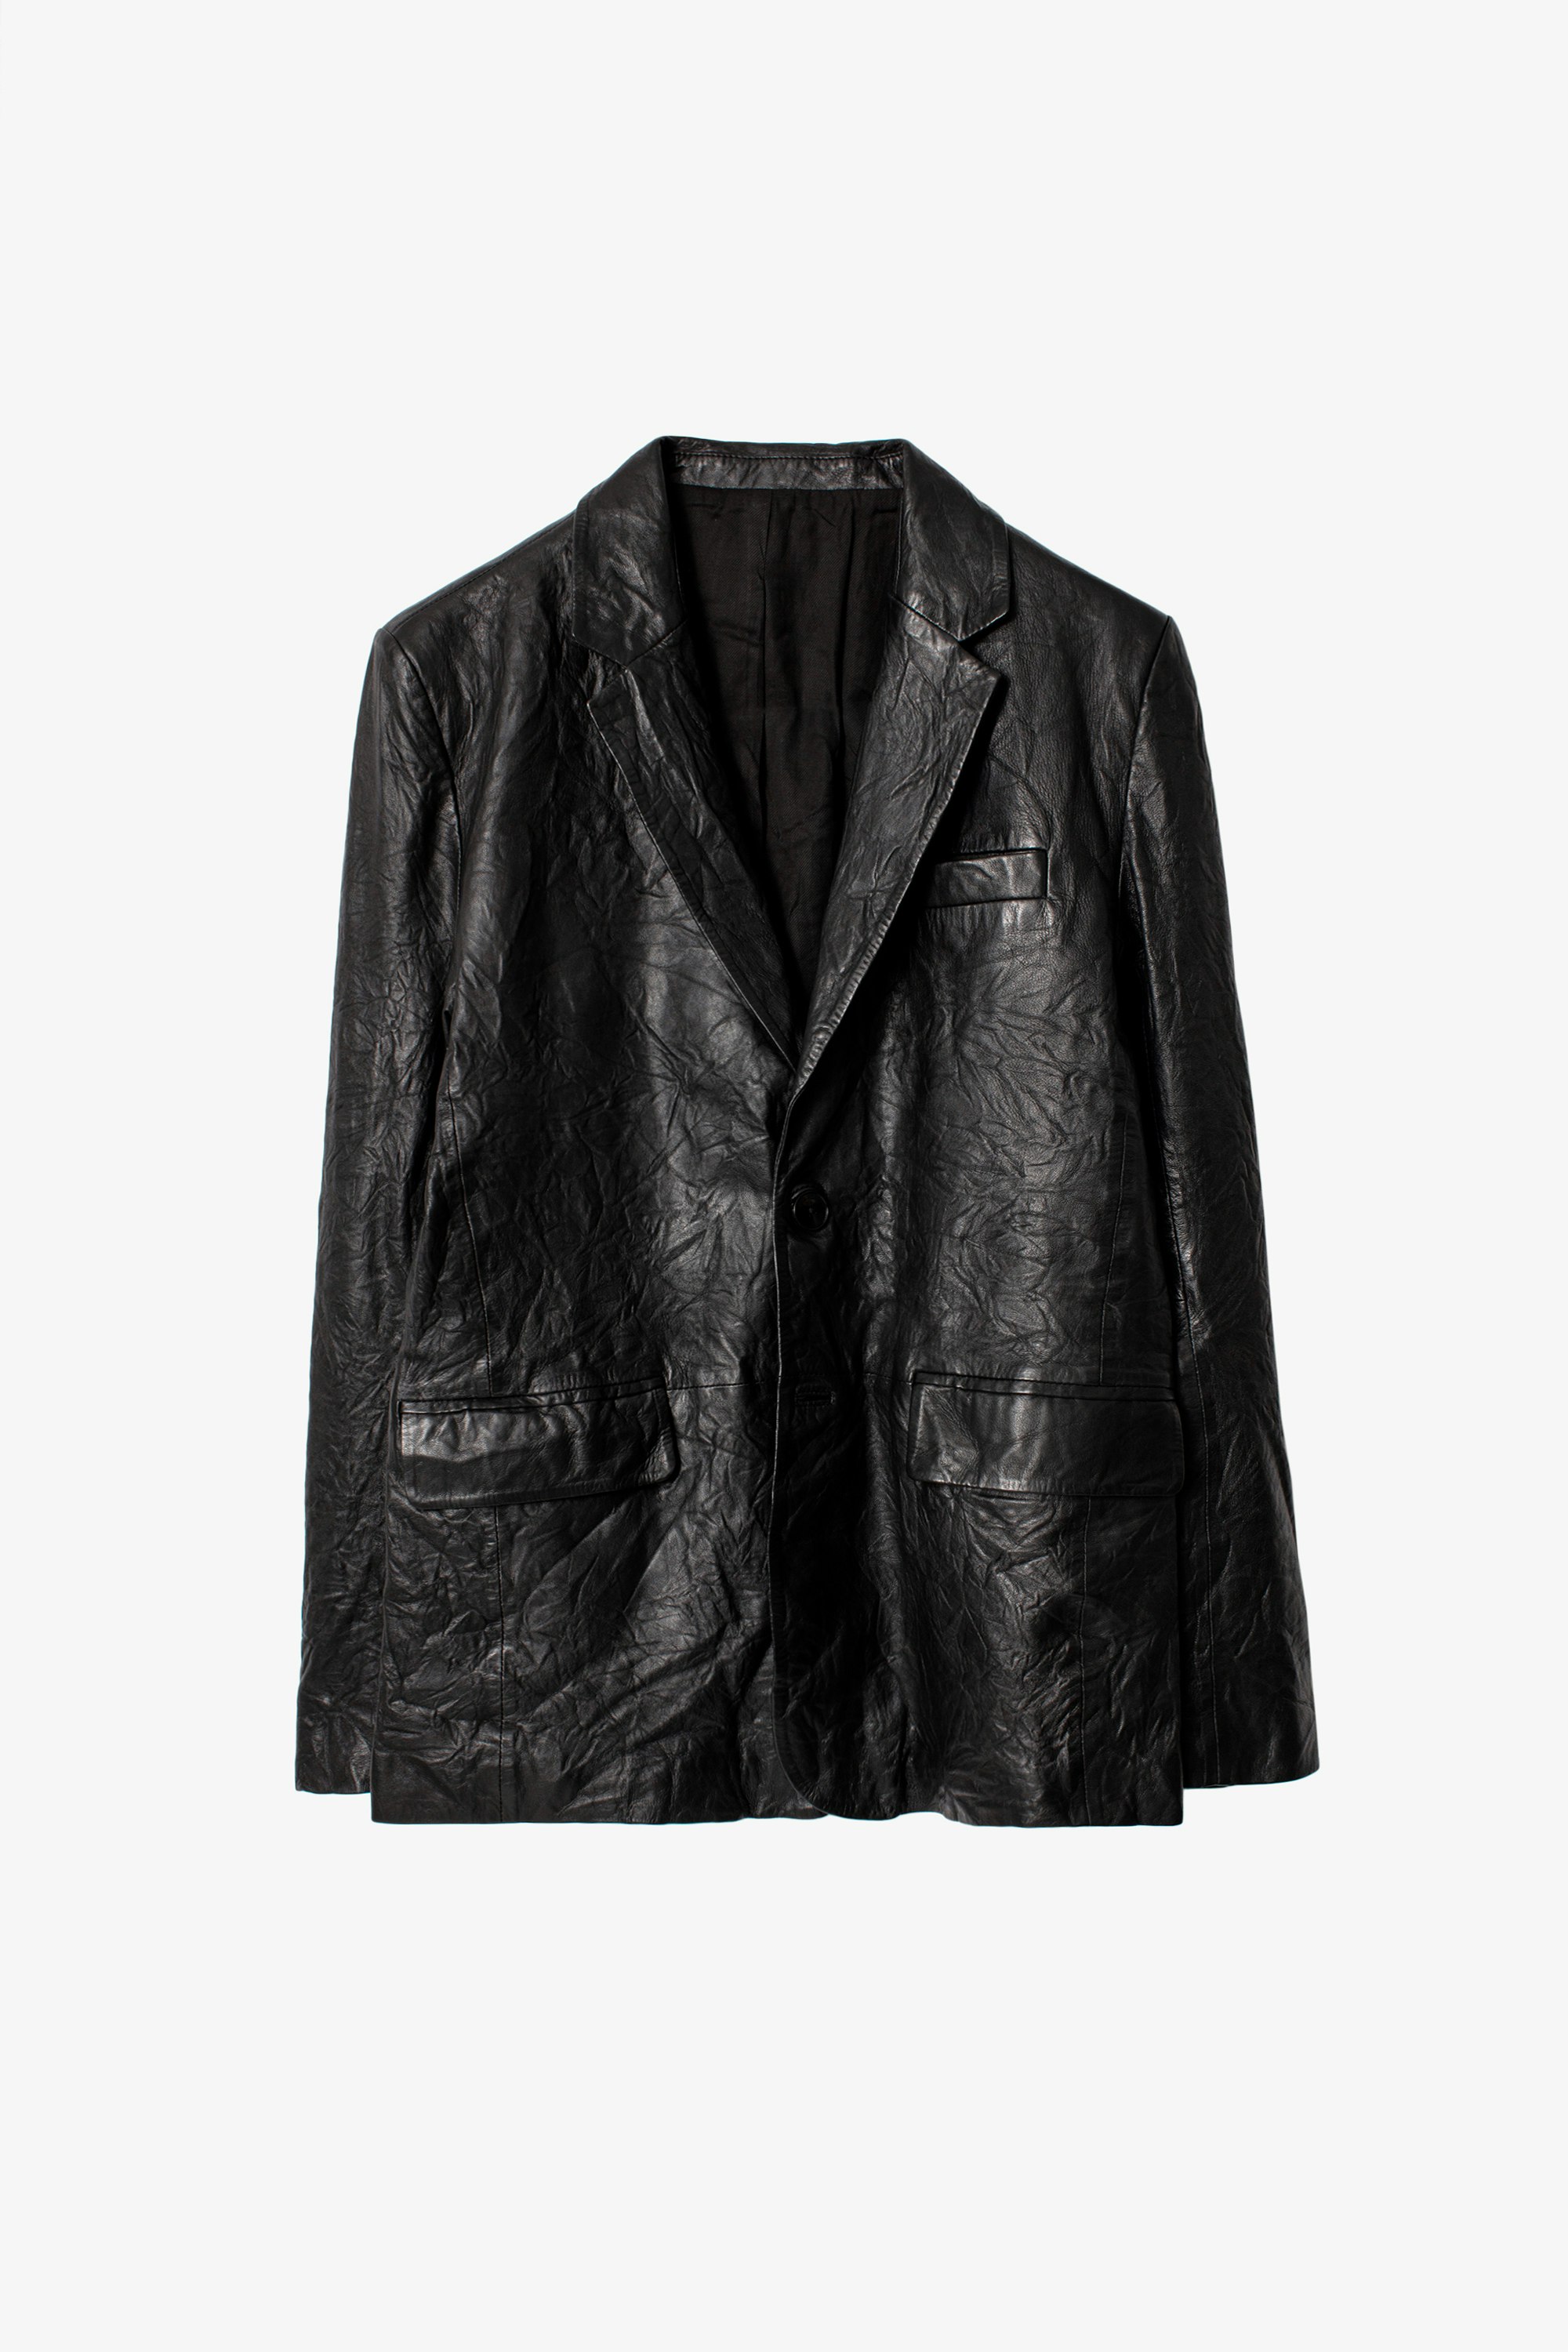 Valfried Crinkled Leather Blazer - Unisex black tailored jacket in crinkled leather.